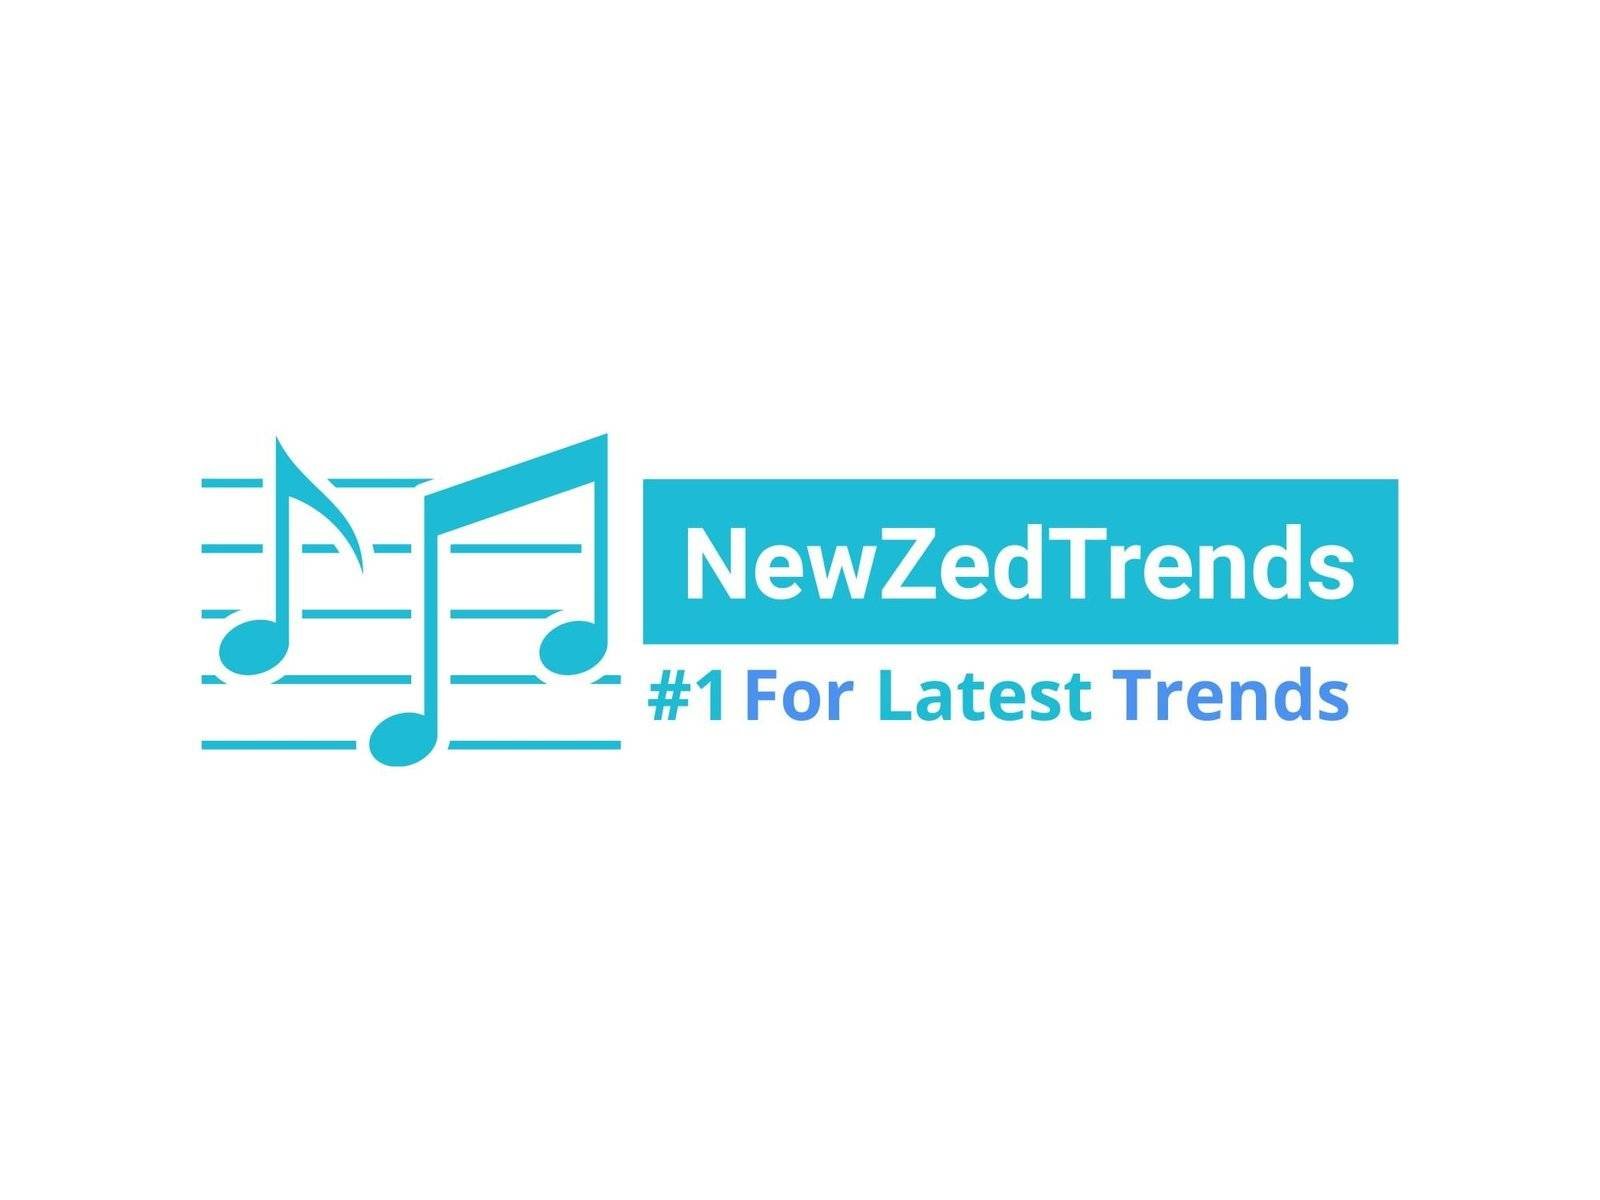 New Zed Trends